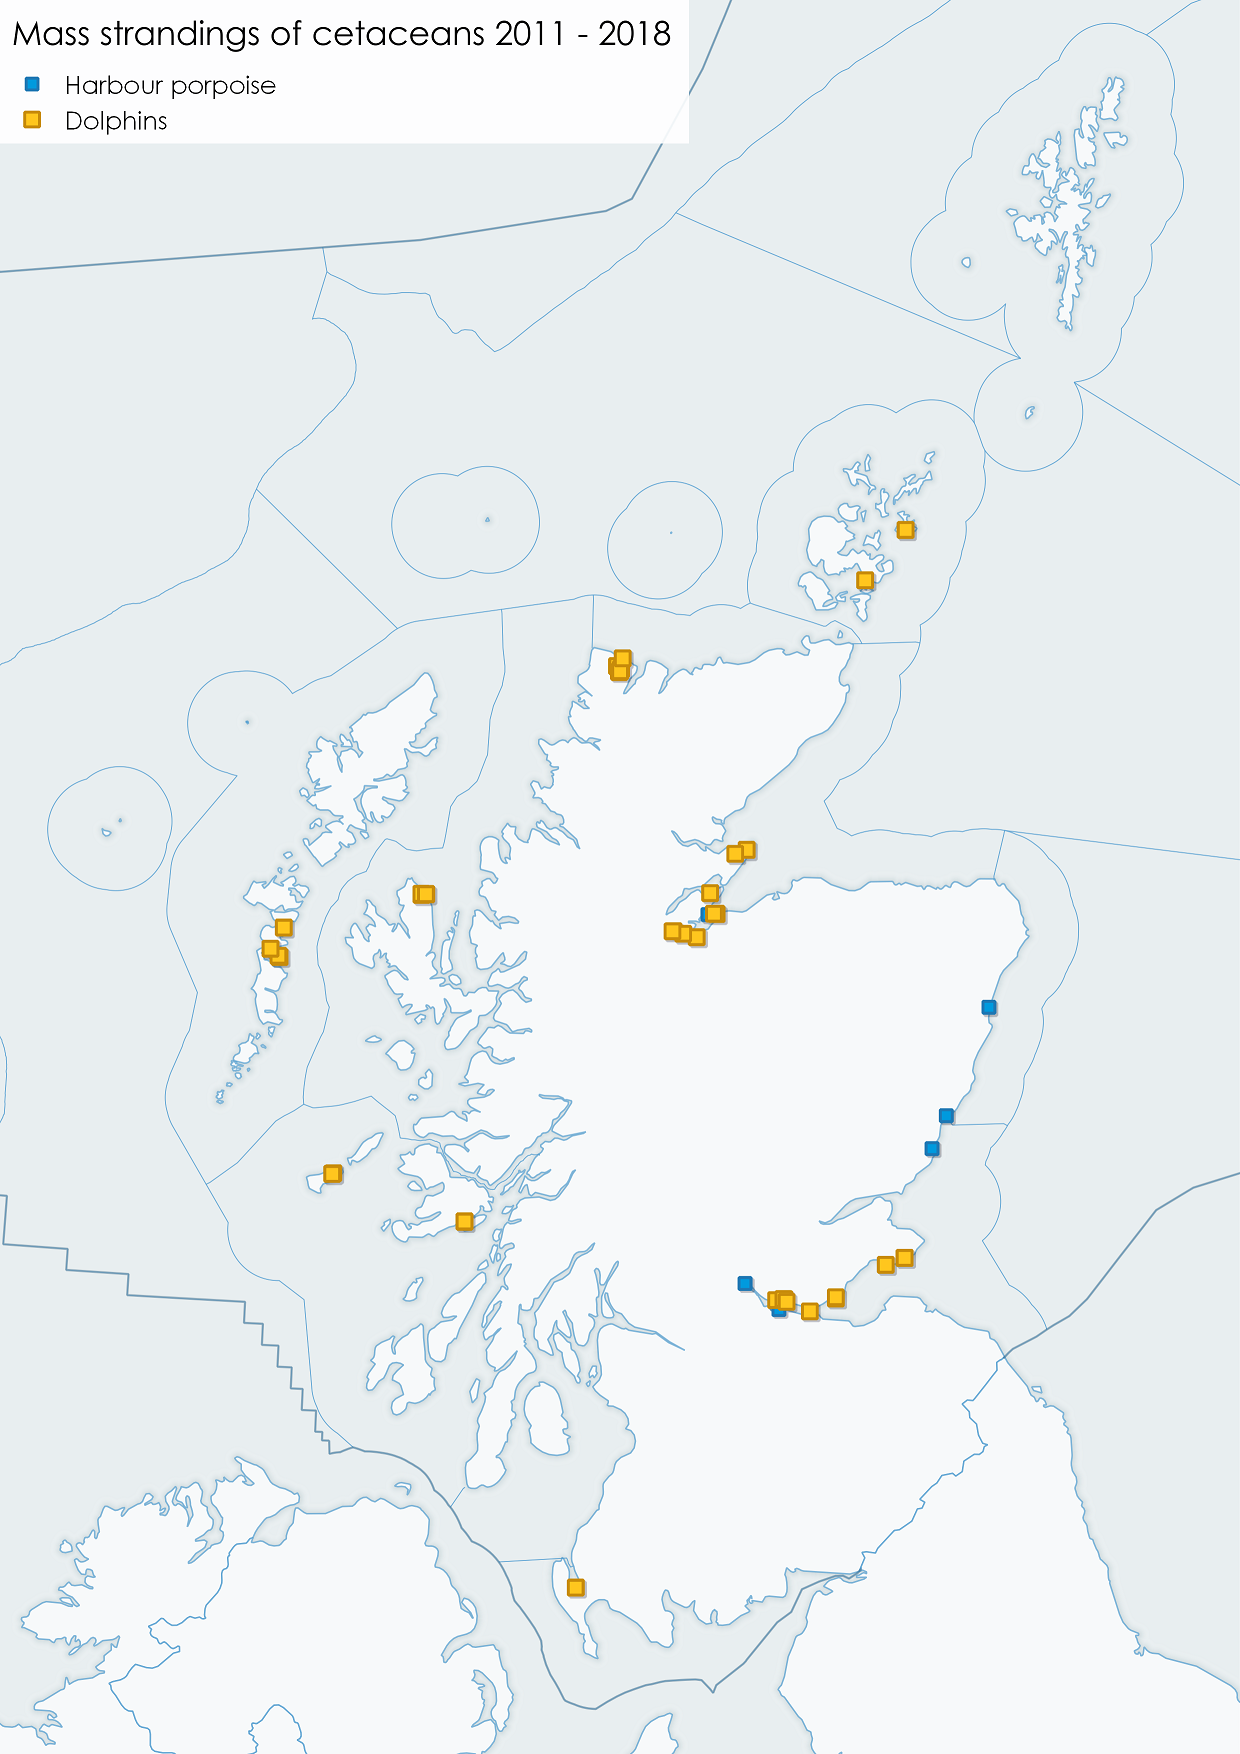 Figure 7: Mass strandings of cetaceans around the Scottish coastline 2011 to 2018 showing Scottish and Offshore Marine Regions. Source: SMASS